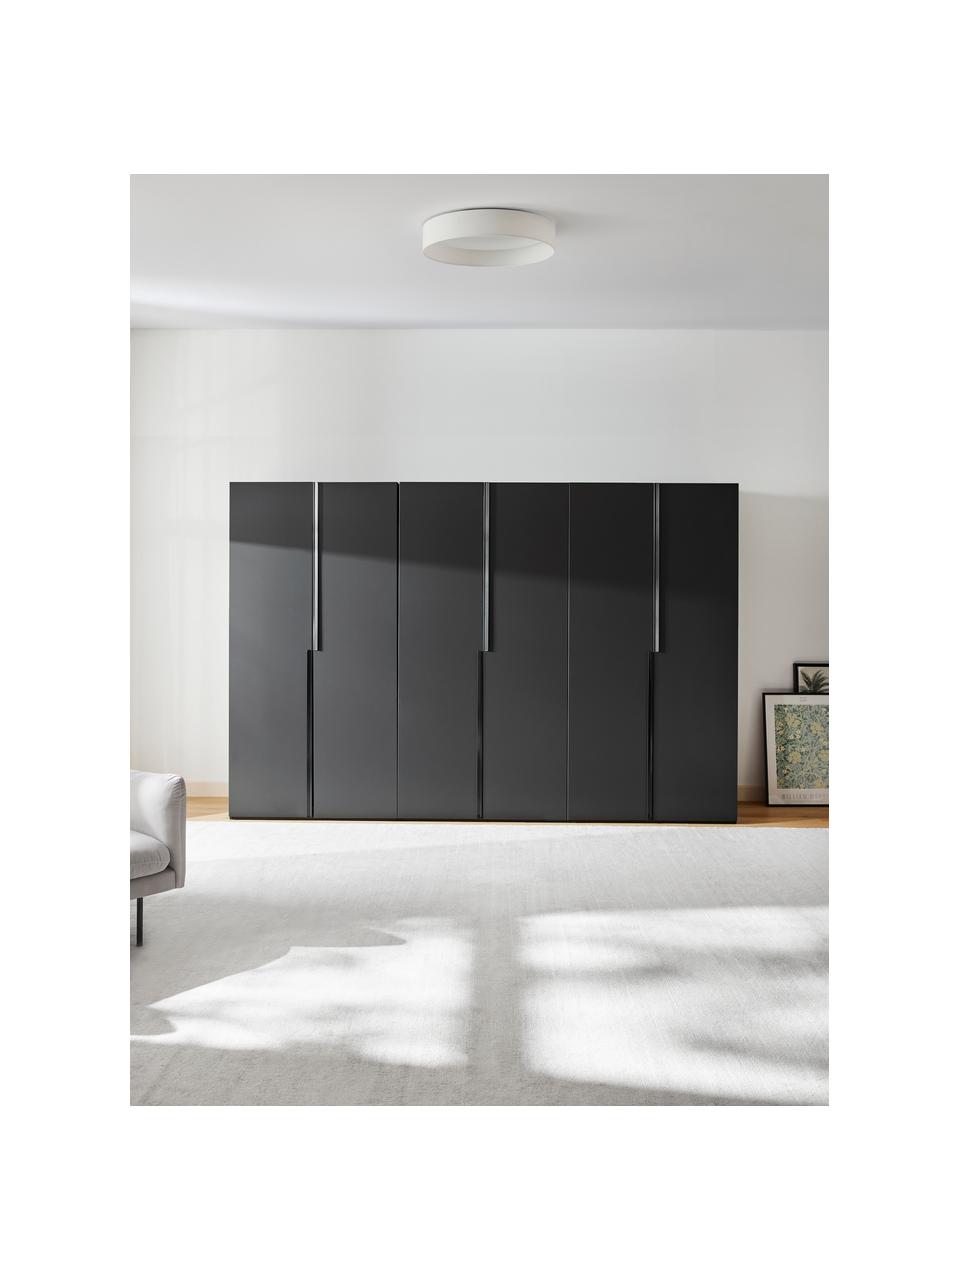 Modulární skříň s otočnými dveřmi Leon, šířka 300 cm, více variant, Černá, Interiér Classic, výška 236 cm